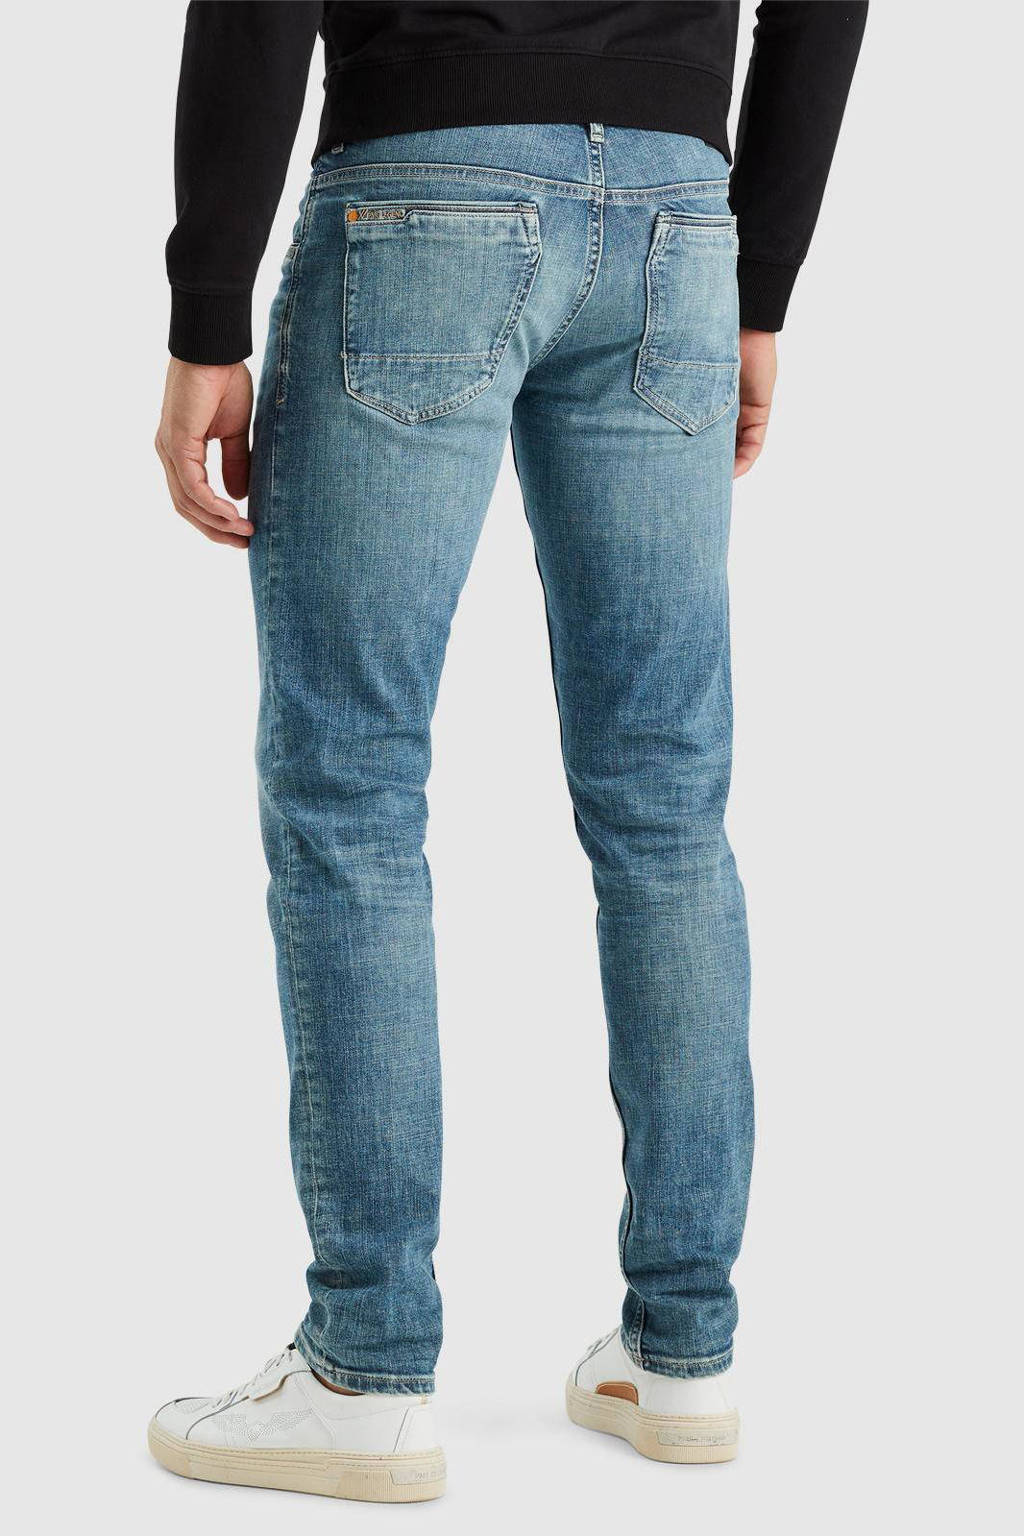 slim jeans XV PME blue fit bright air wehkamp DENIM Legend |